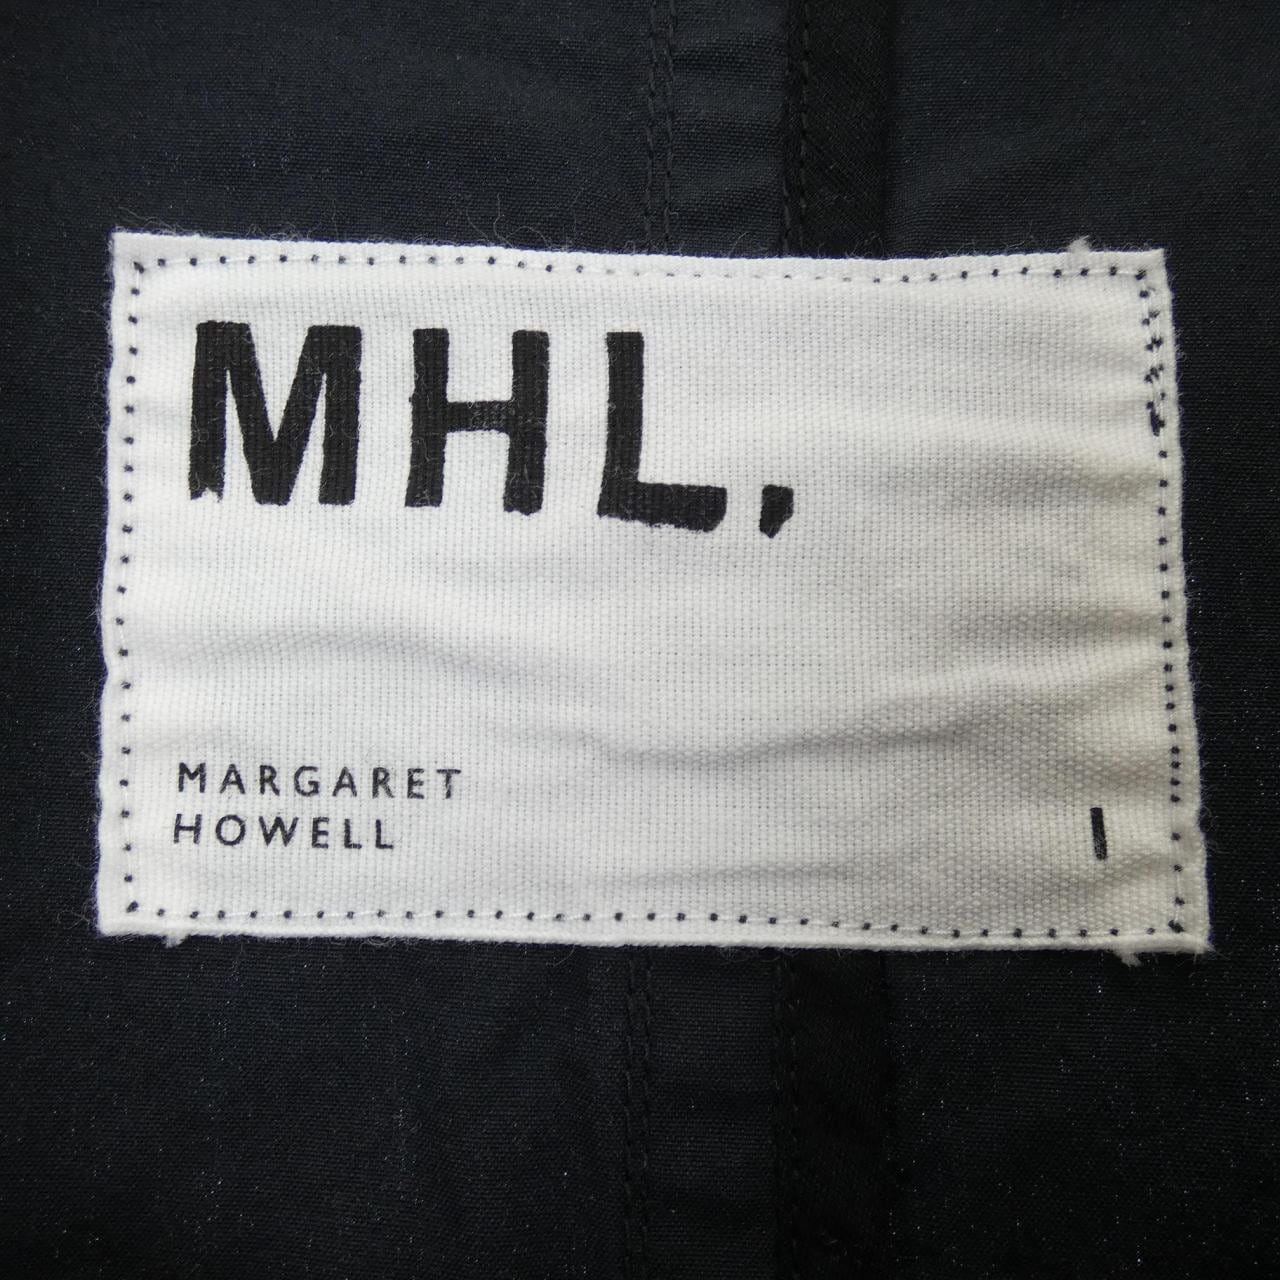 MHL MHL Coat